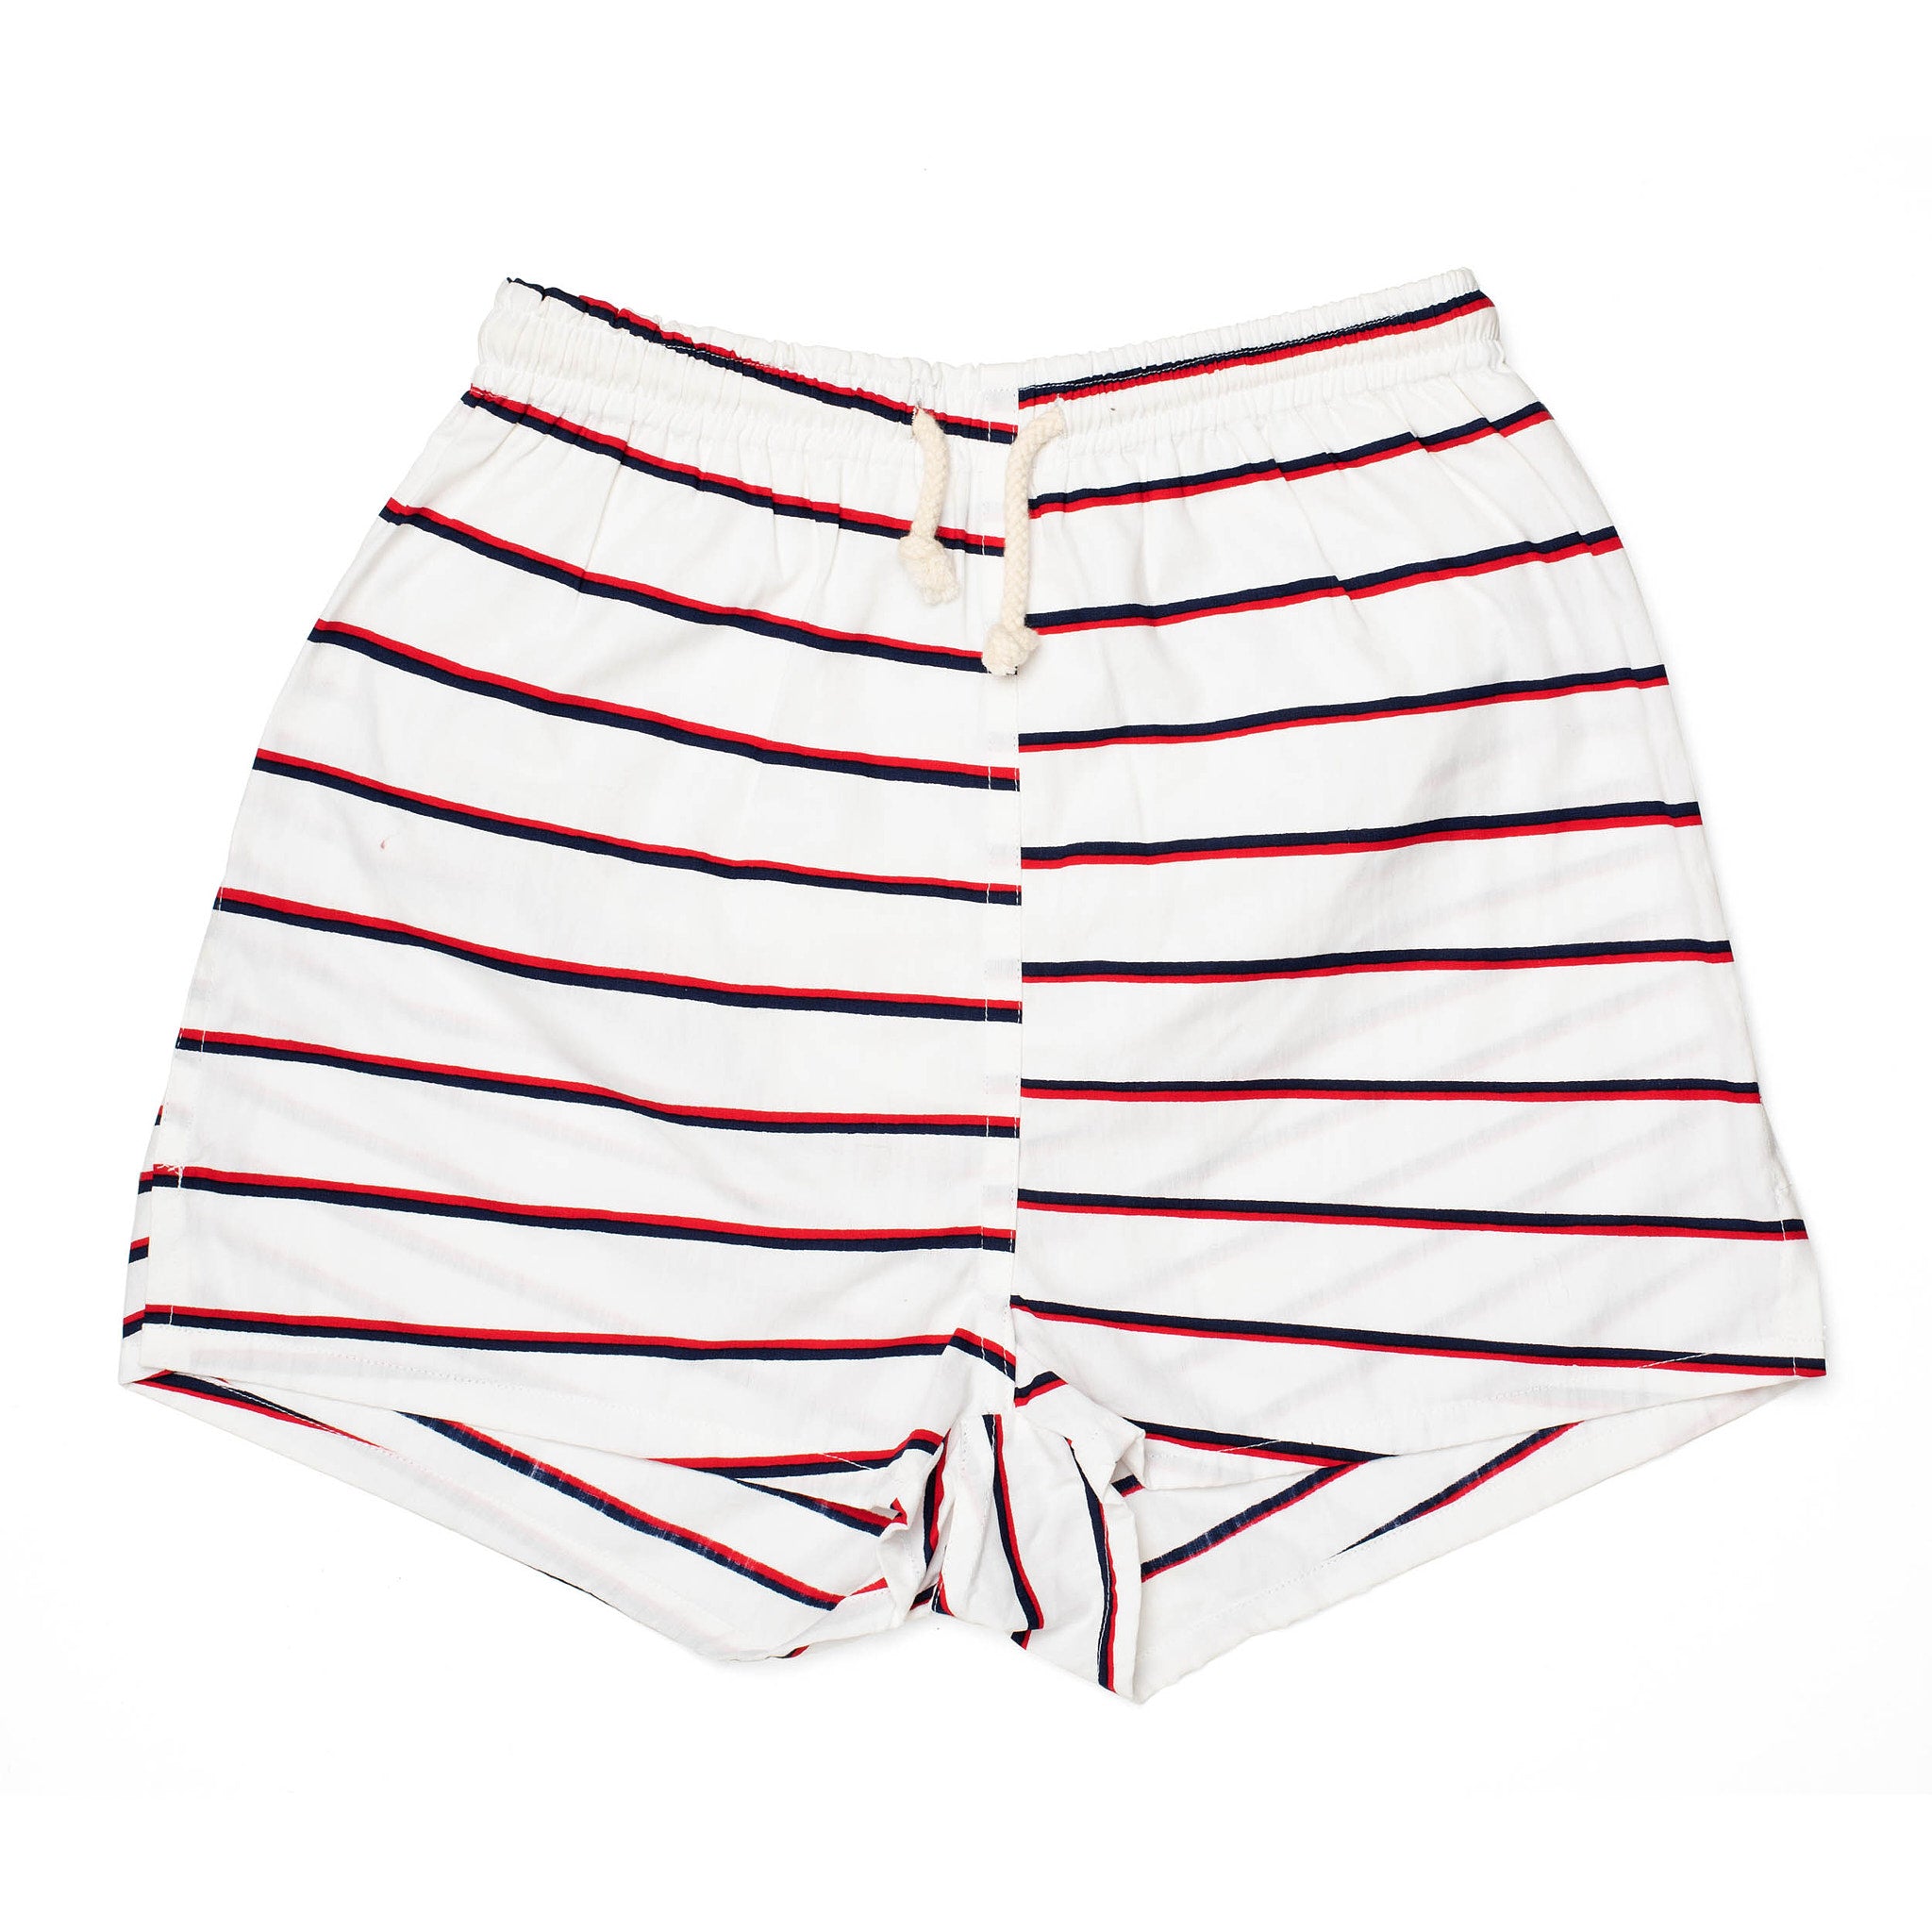 RUBINACCI Napoli White Striped Cotton Bathing Suit Swim Shorts Trunks NEW XS